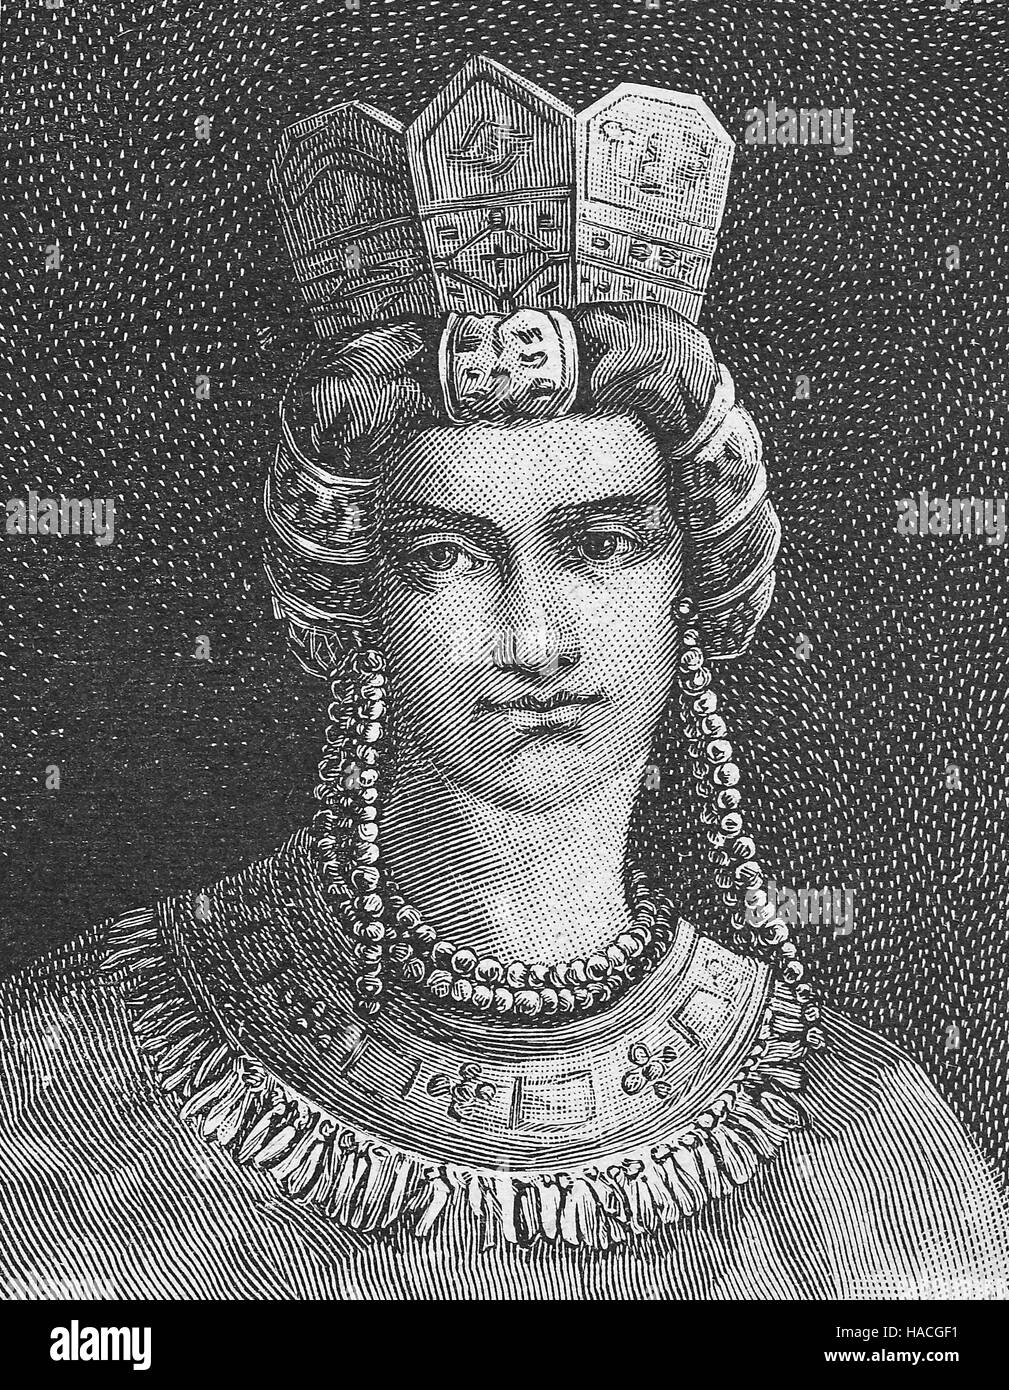 Woman with Byzantine hair style, historic illustration, woodcut Stock Photo